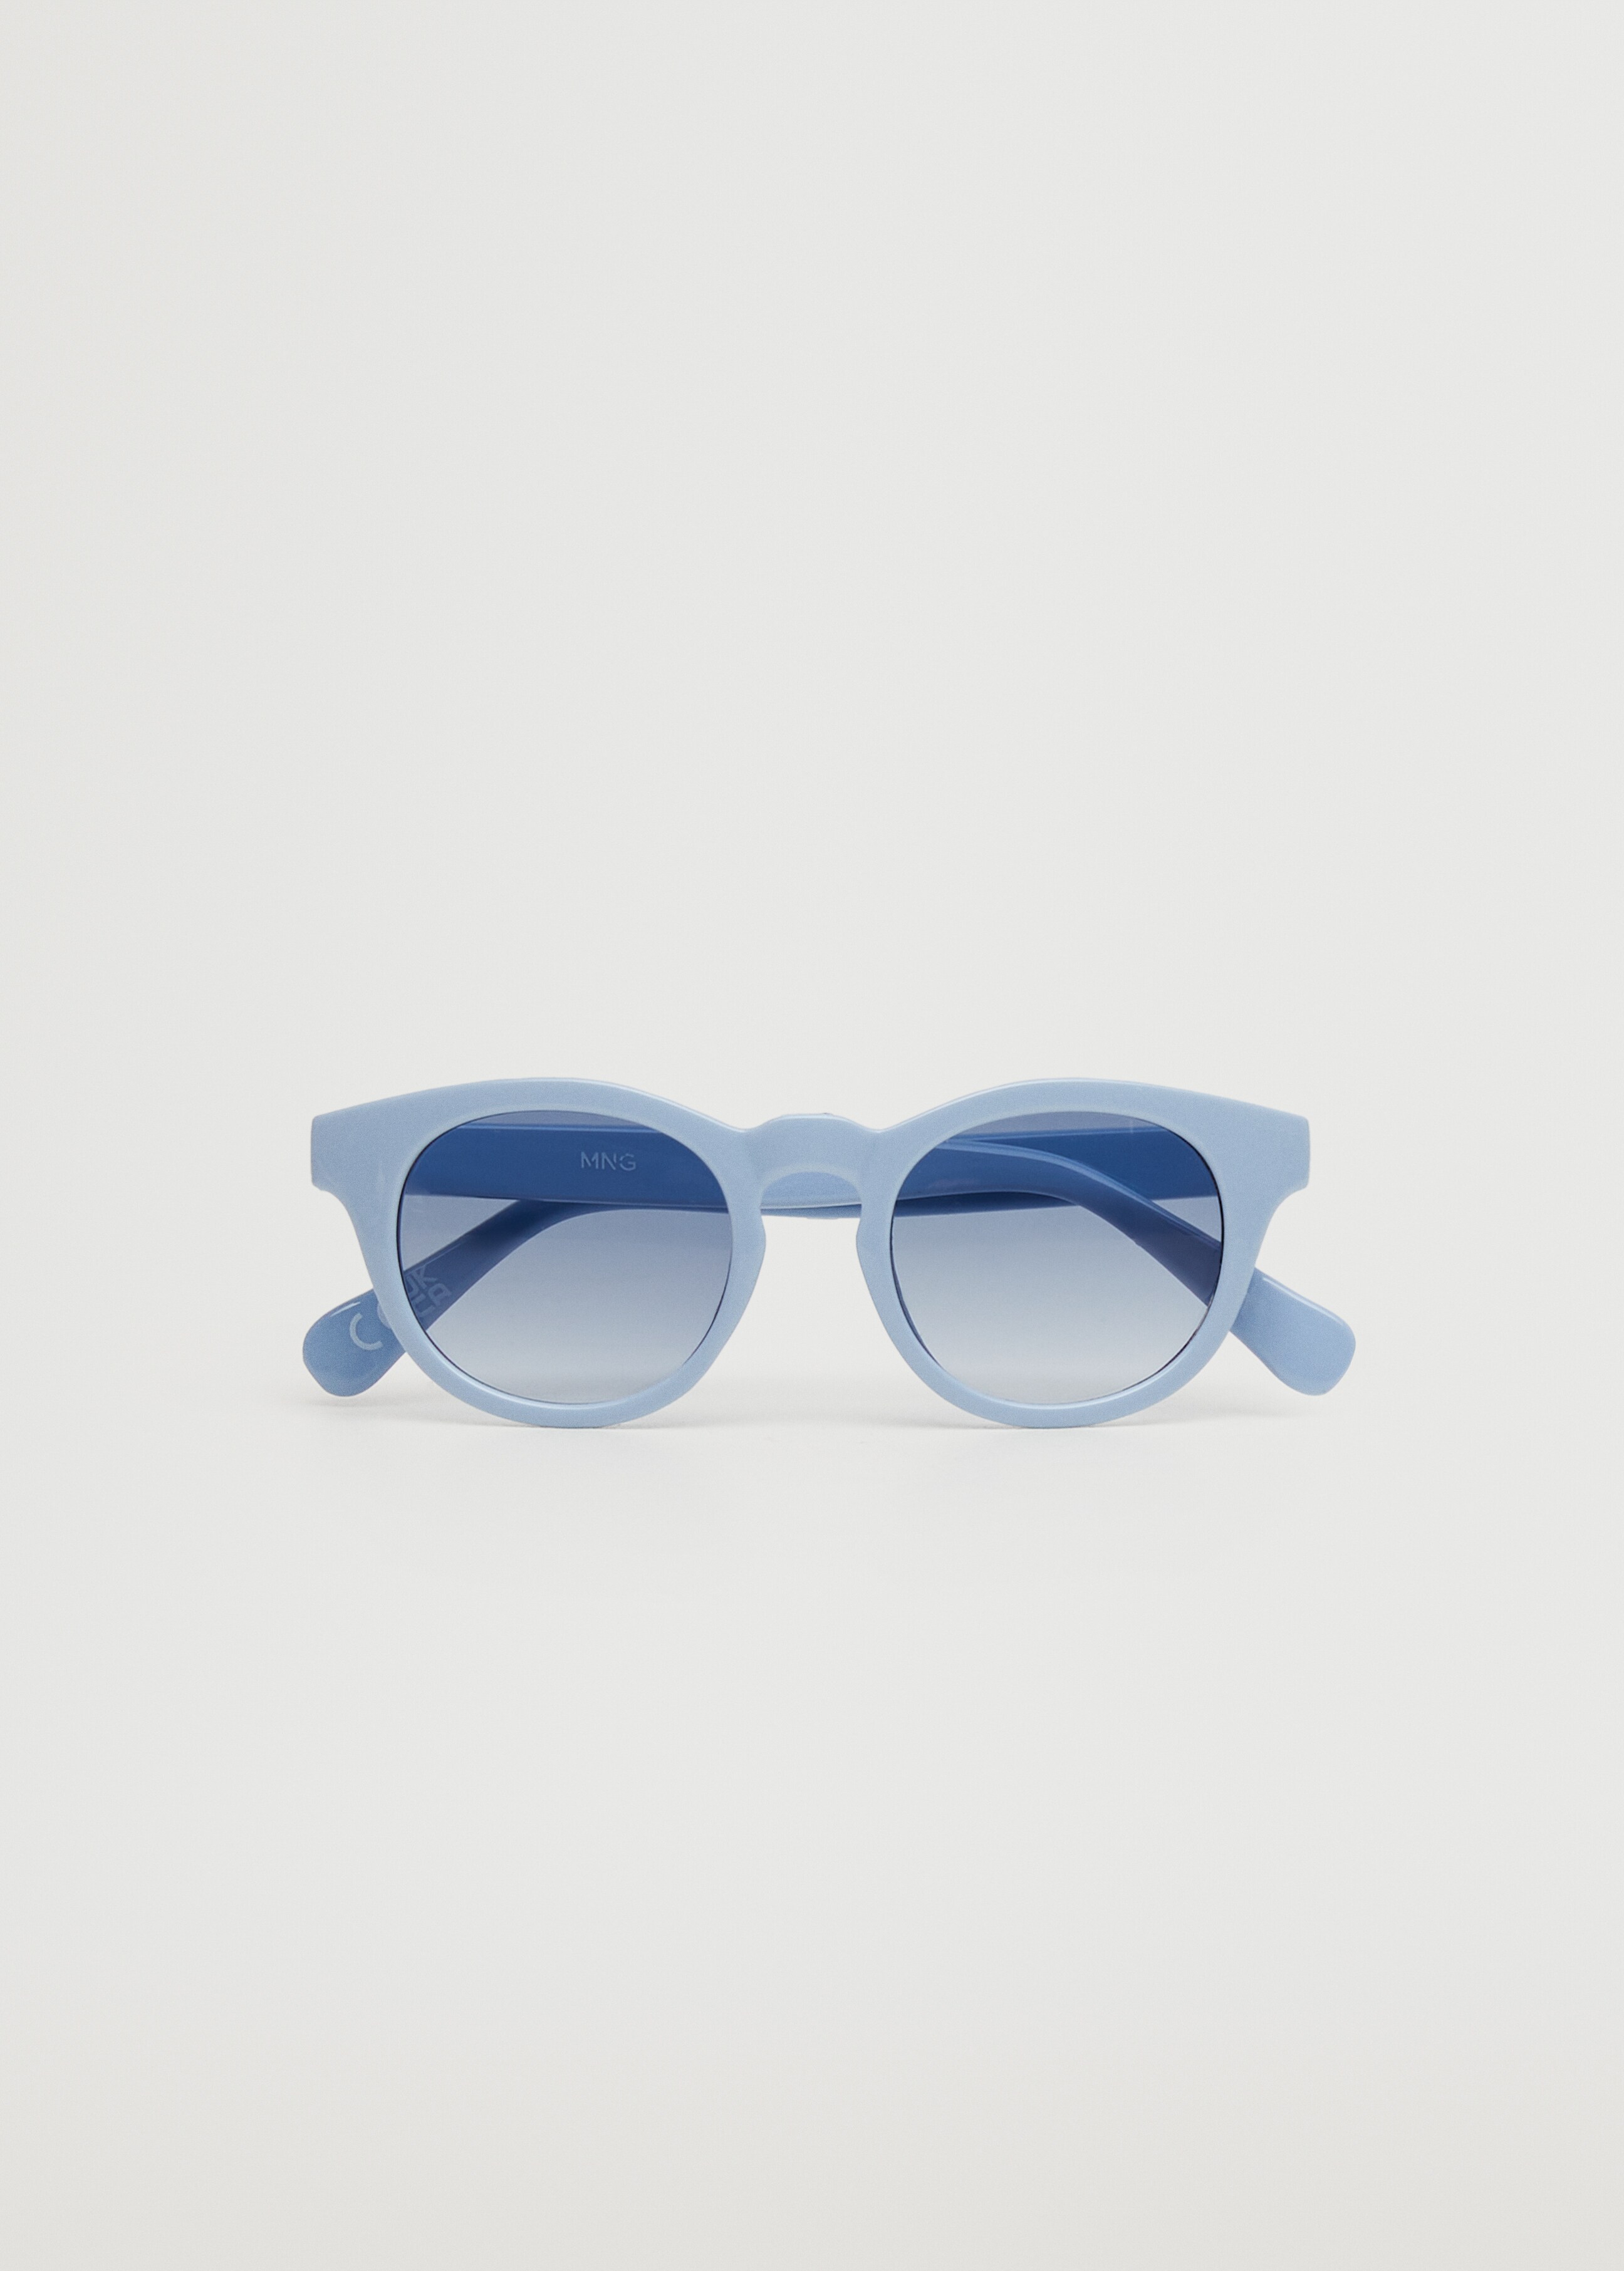 Clear frame sunglasses - General plane